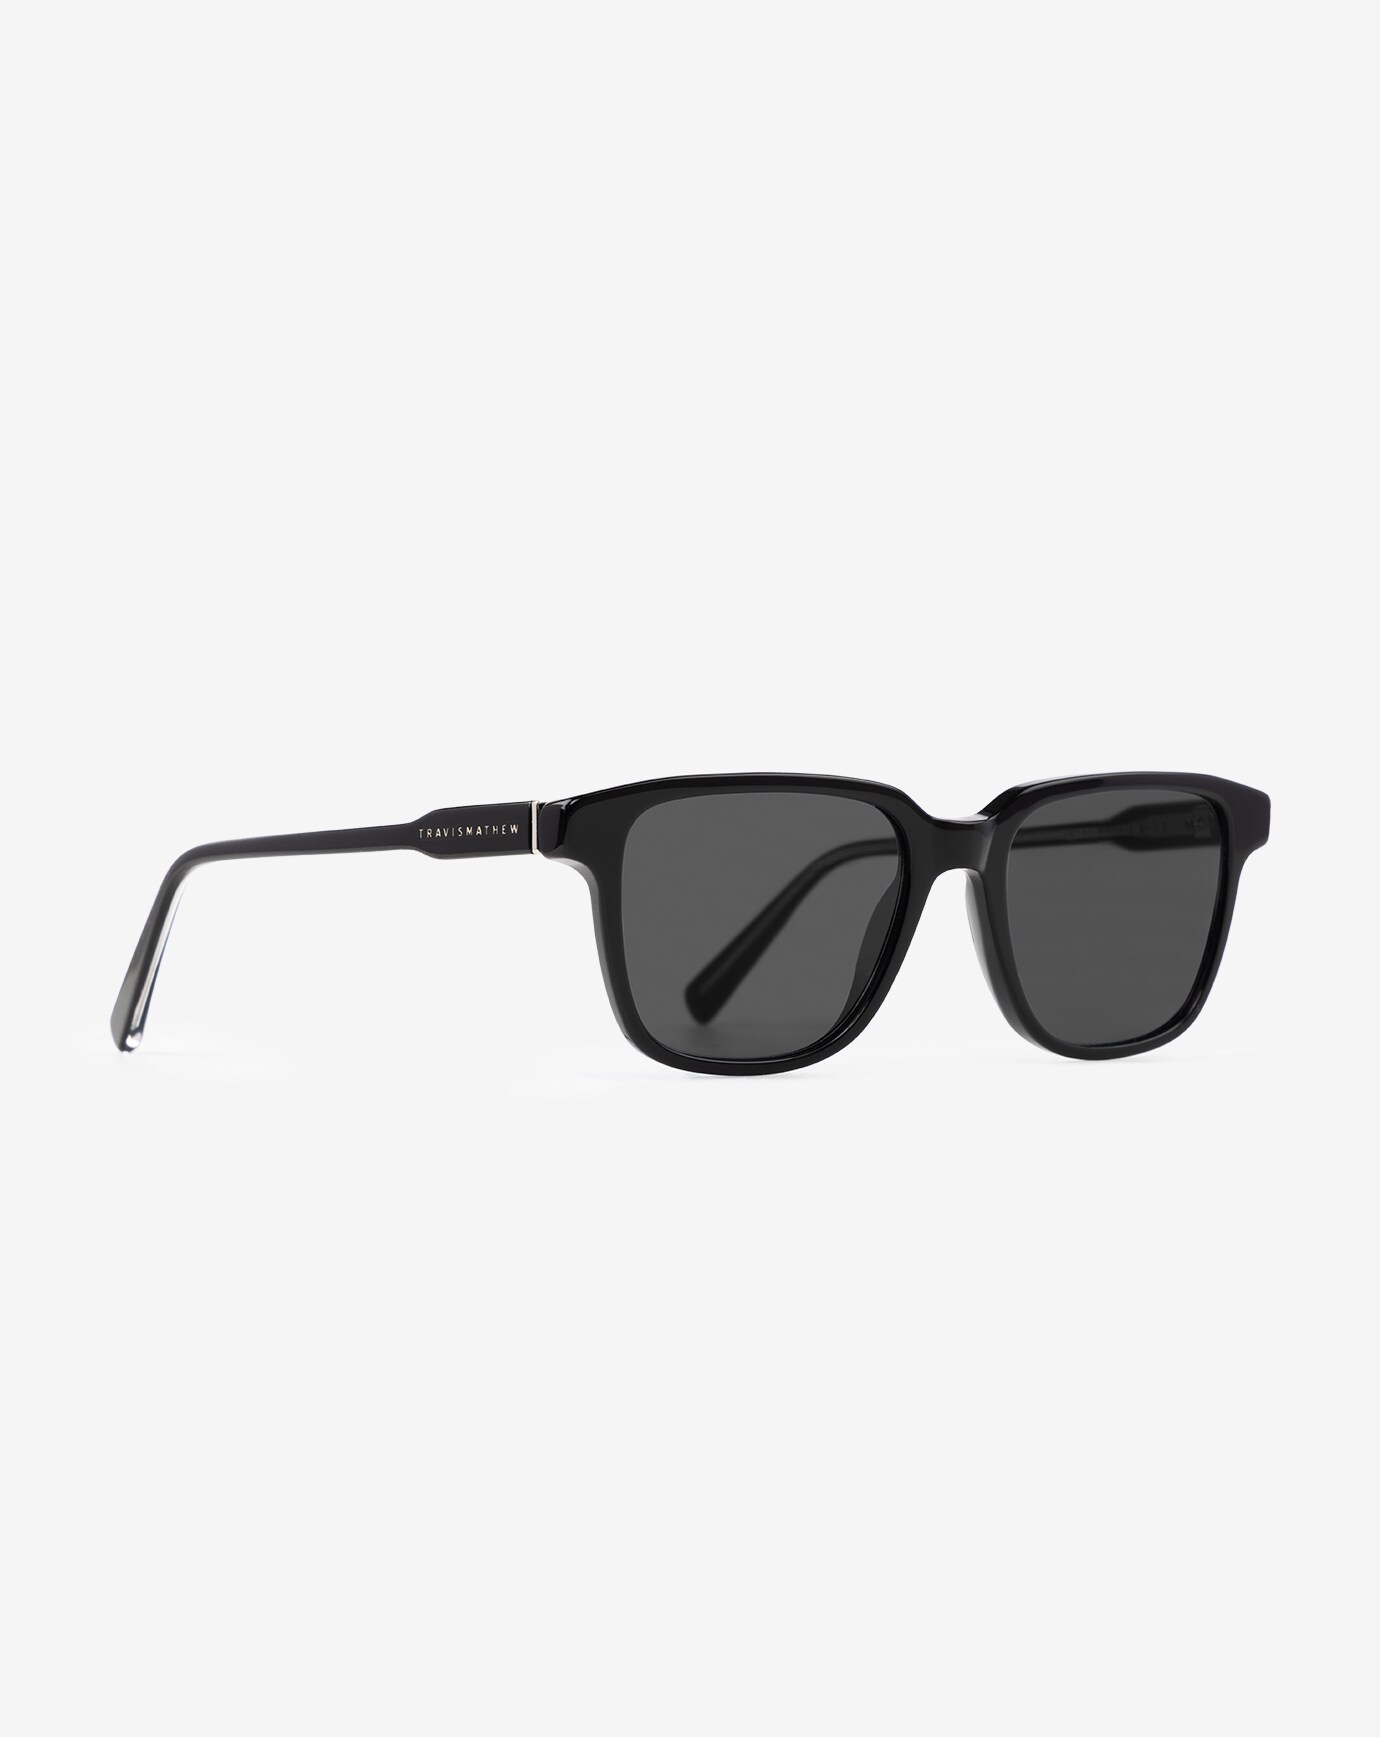 Cary Matte Black TNS 12220 Sunglasses Polarized Lens Medium Thermogrip -  Walmart.com